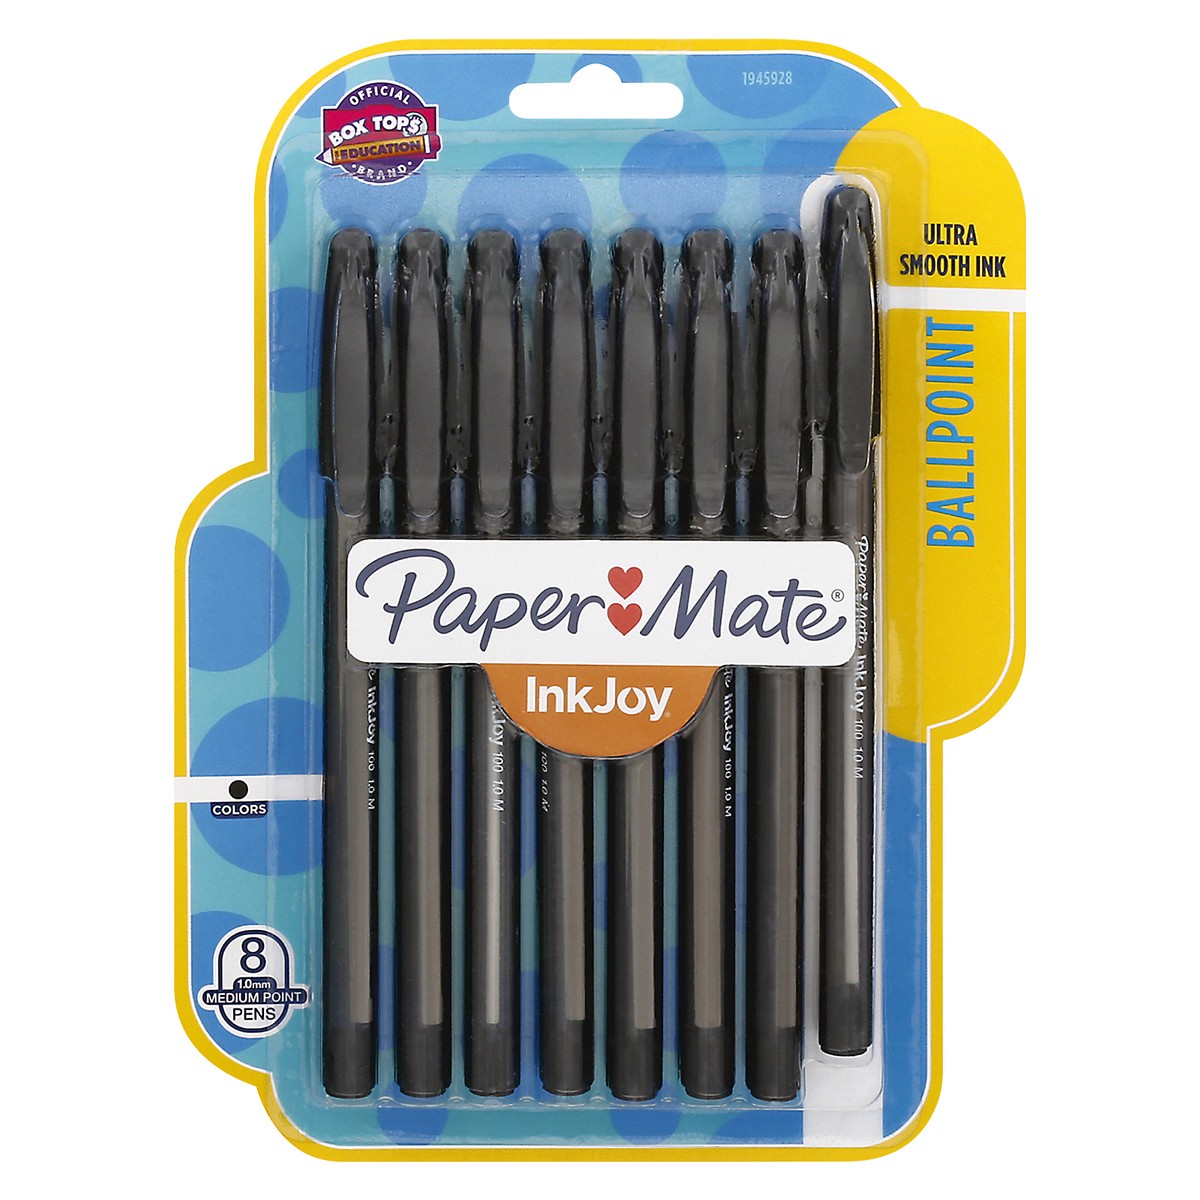 Paper Mate InkJoy Medium Point Ballpoint Black 1.0 mm Pens 8 ea 8 ct